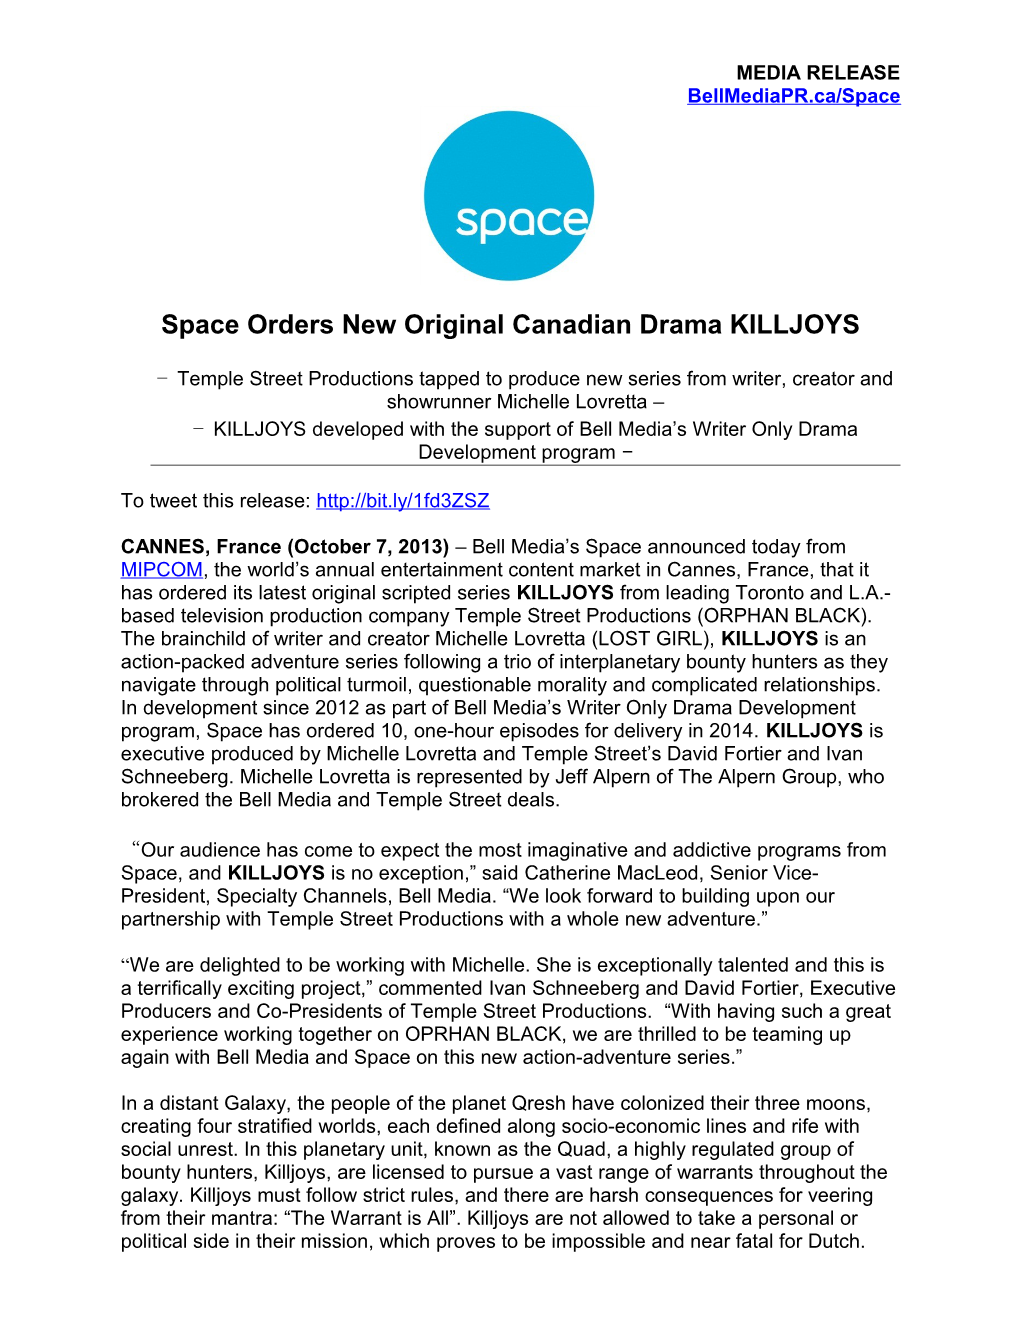 Space Orders New Original Canadian Drama KILLJOYS